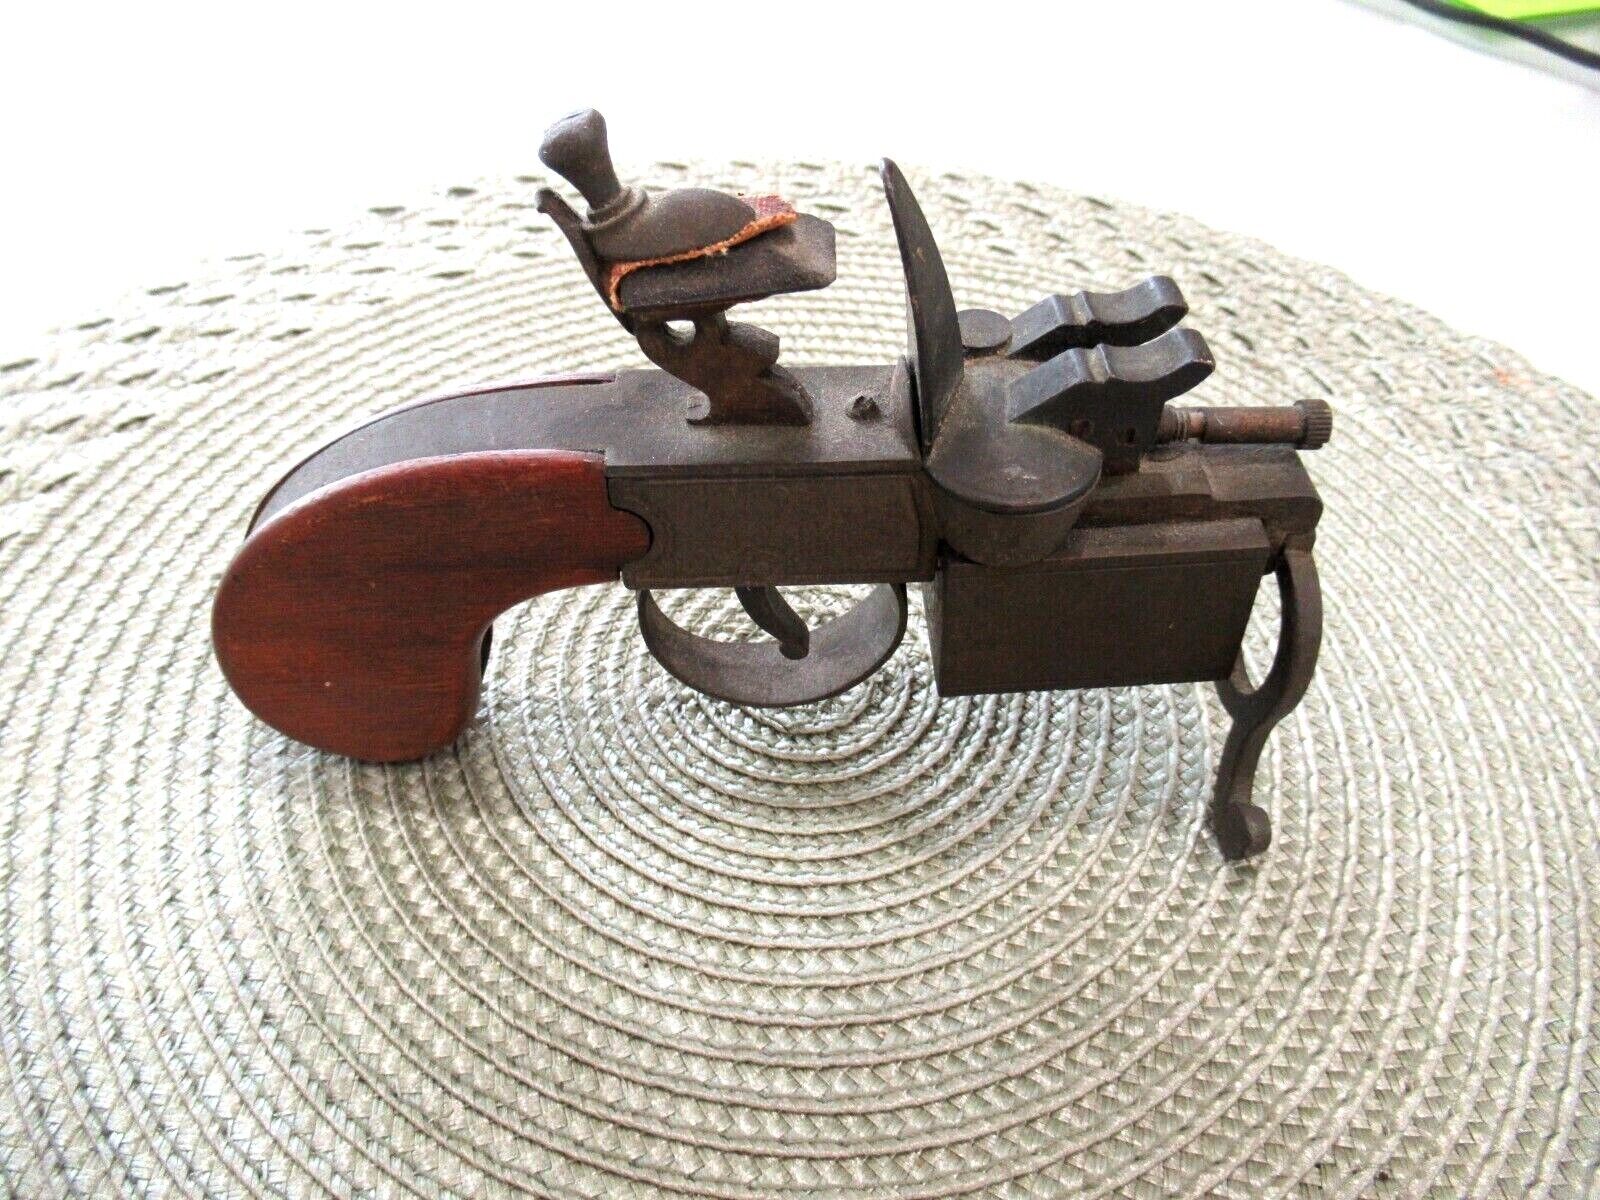  Vintage Dunhill Tinder Pistol Gun Shaped Table Lighter USA L8.22